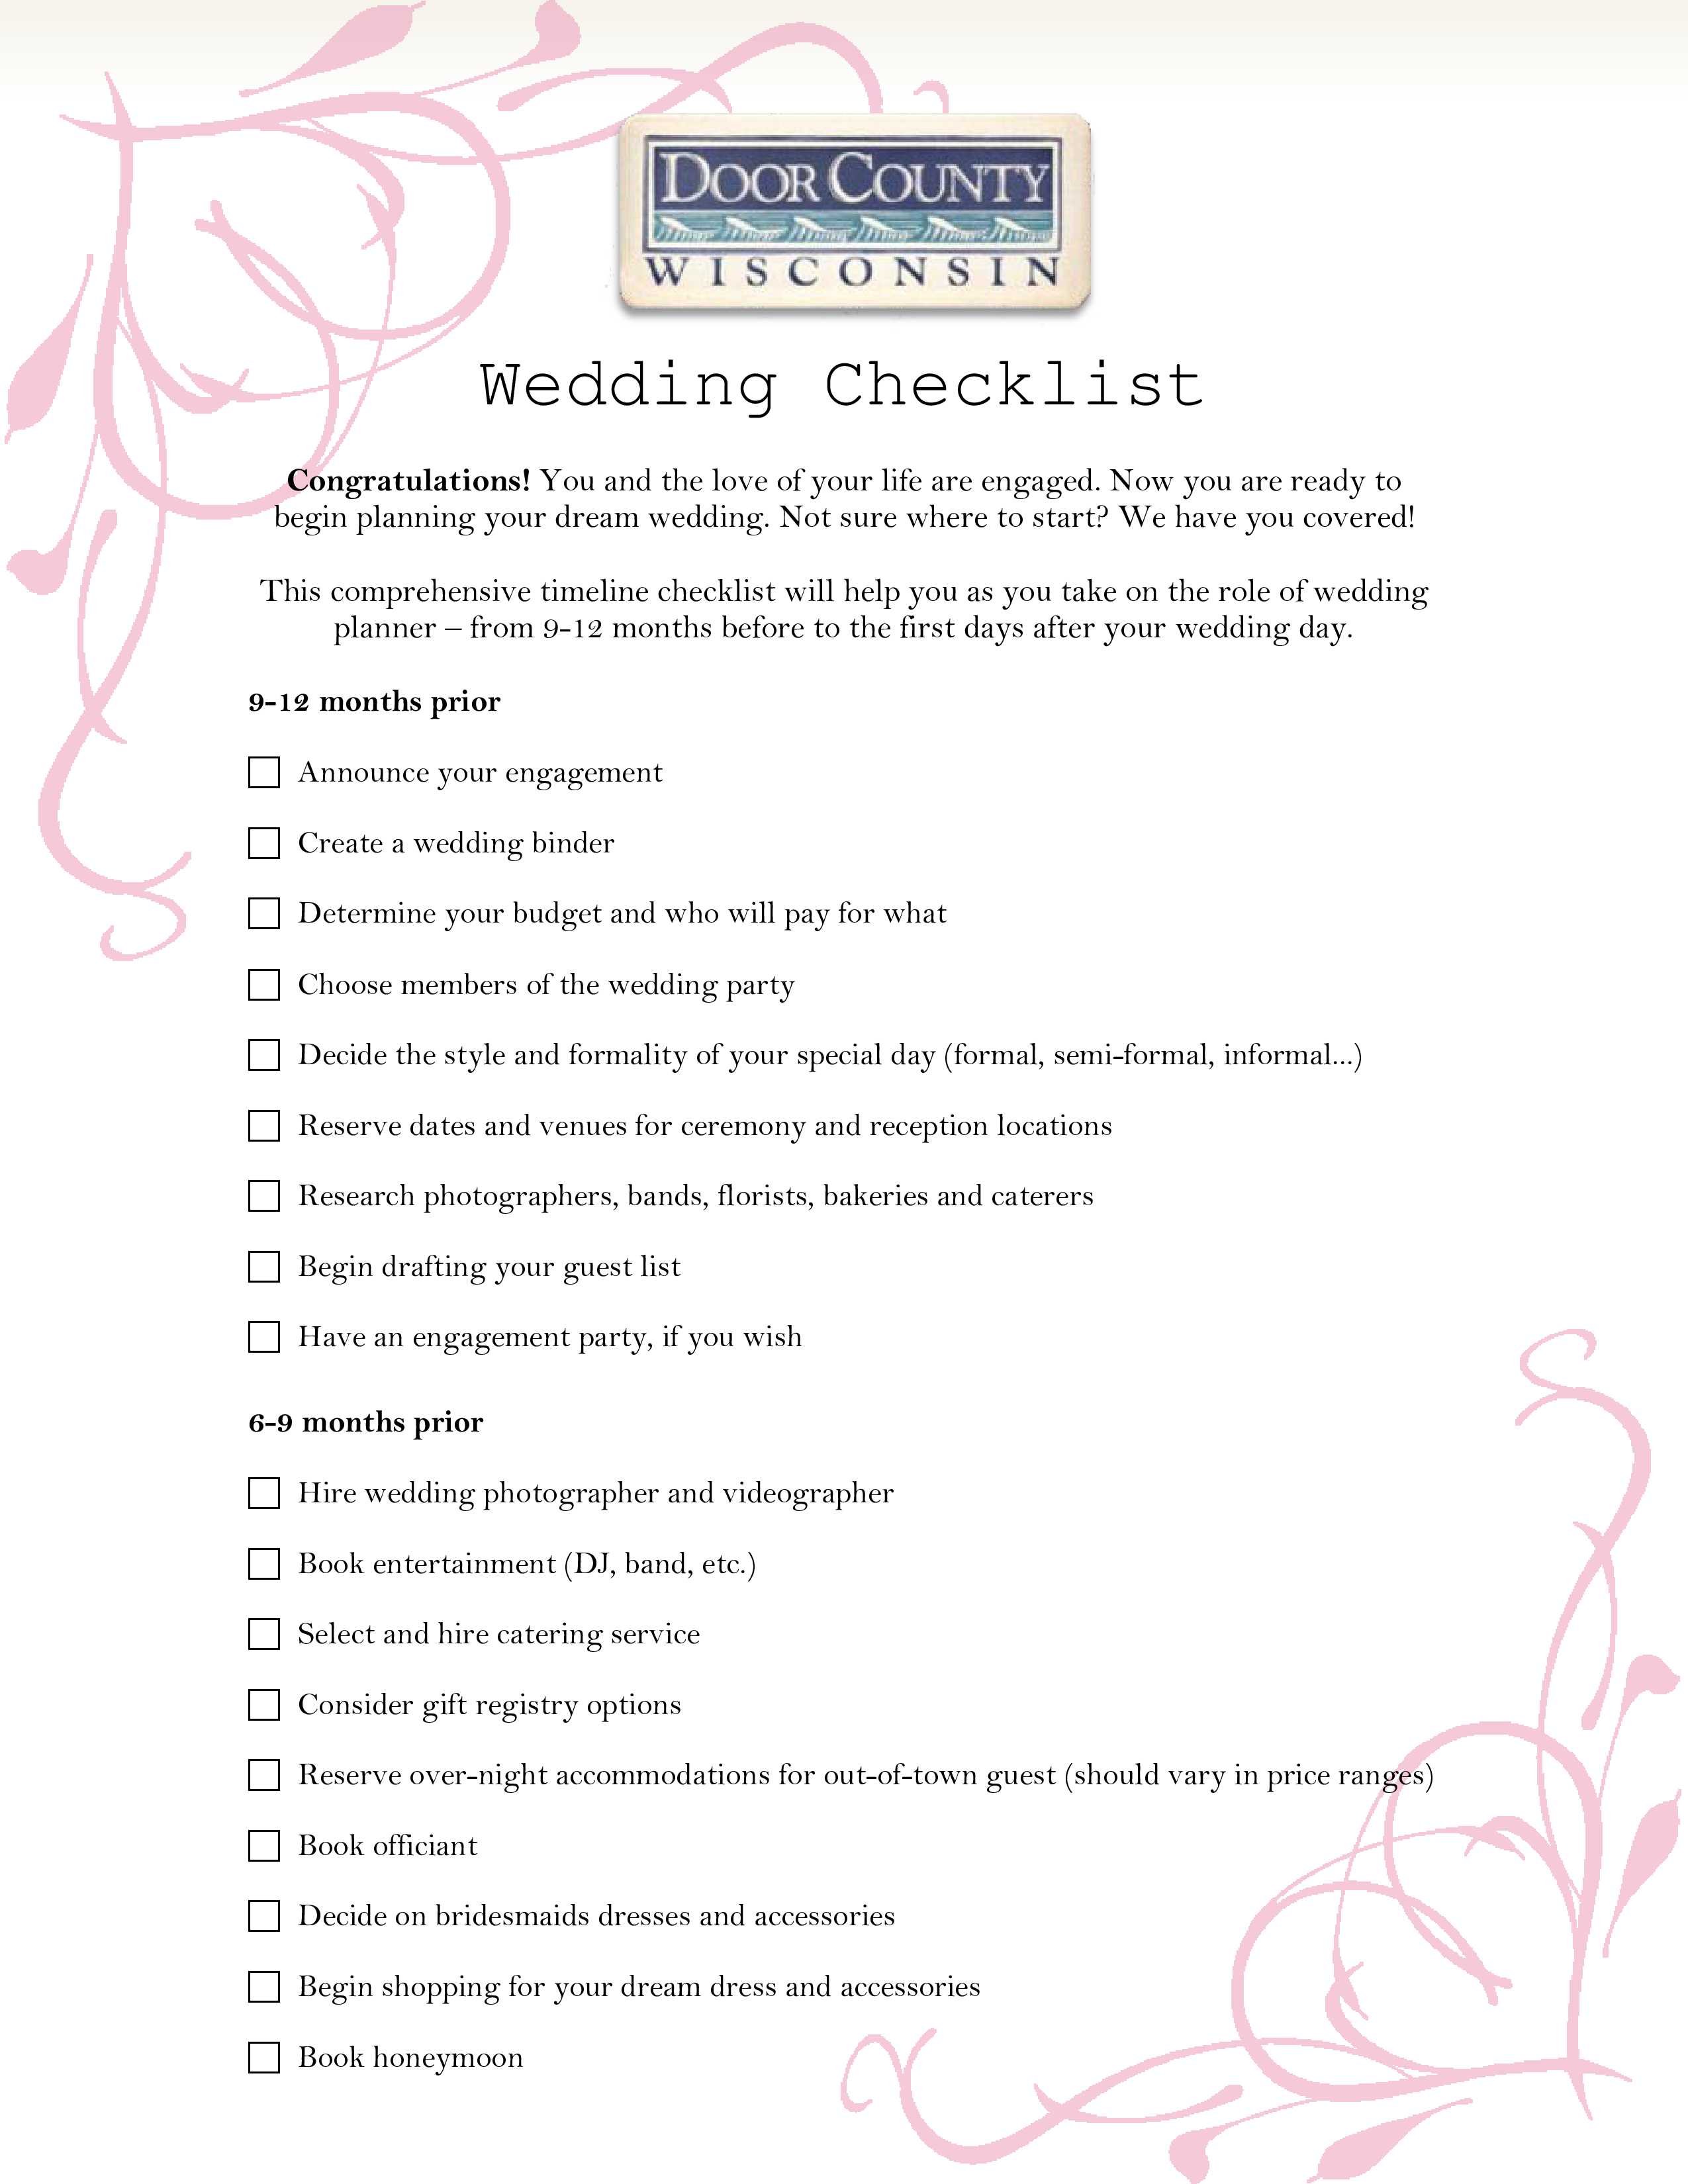 Wedding Day Items Checklist main image